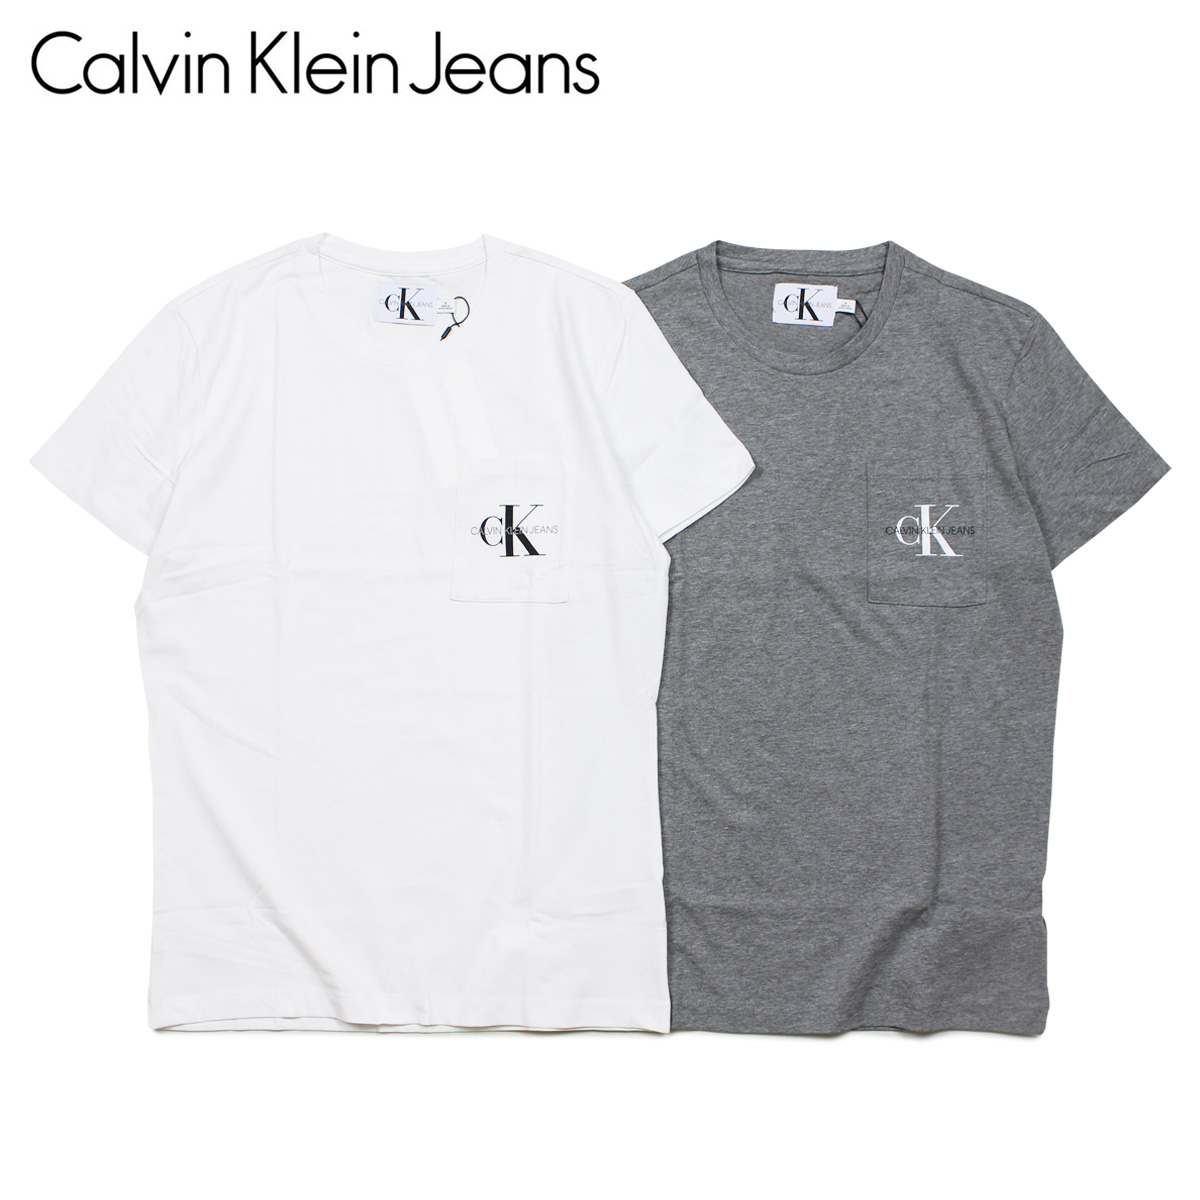 calvin klein jeans grey t shirt